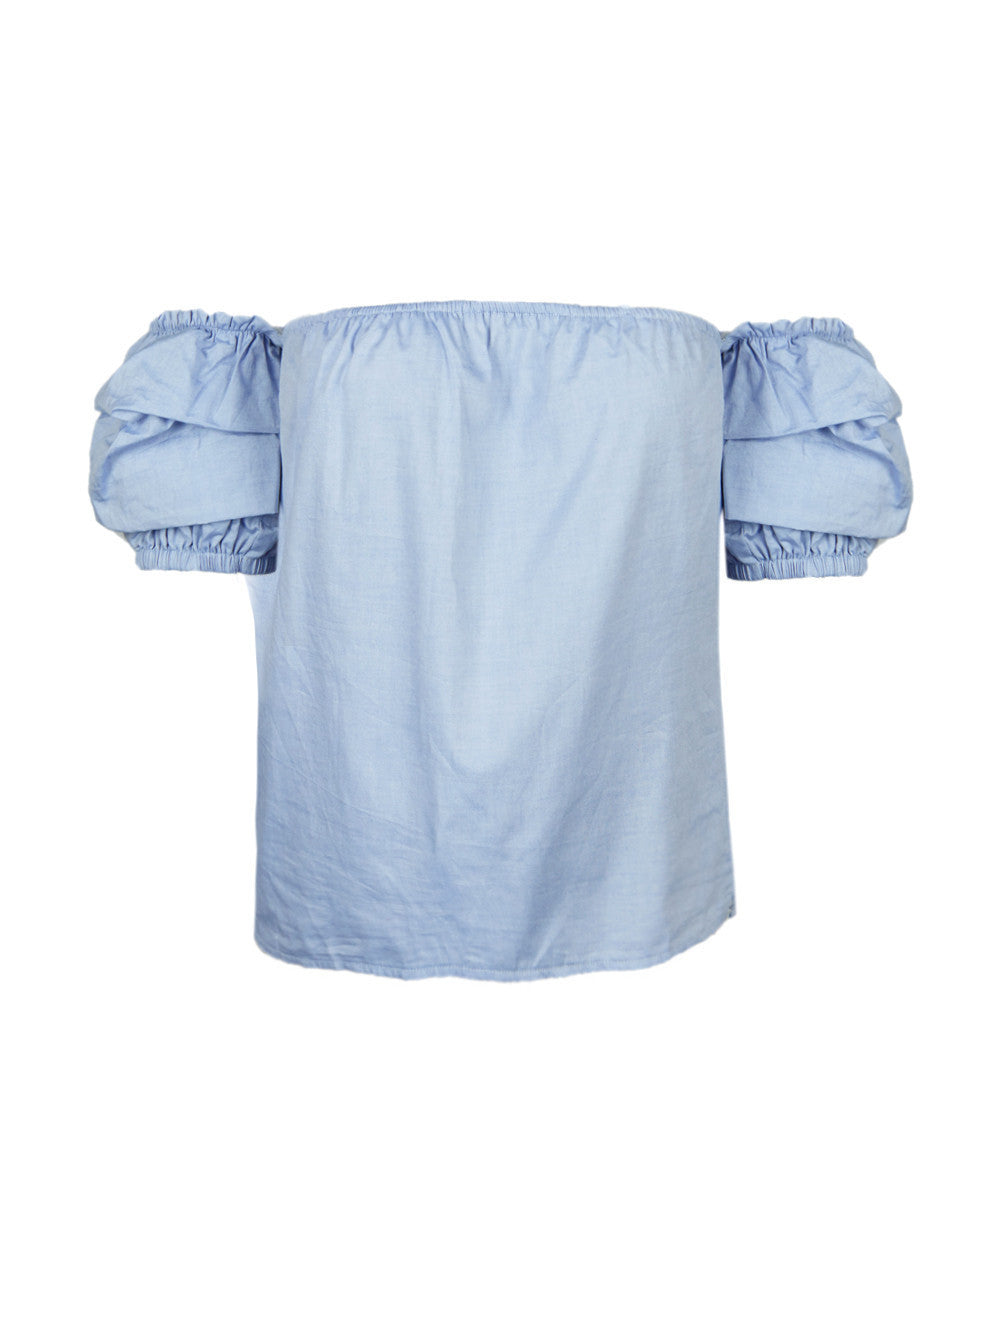 Off The Shoulder Tulum Top Loose Blouse Shirt Blue Fashion Clothes Women Solid Color